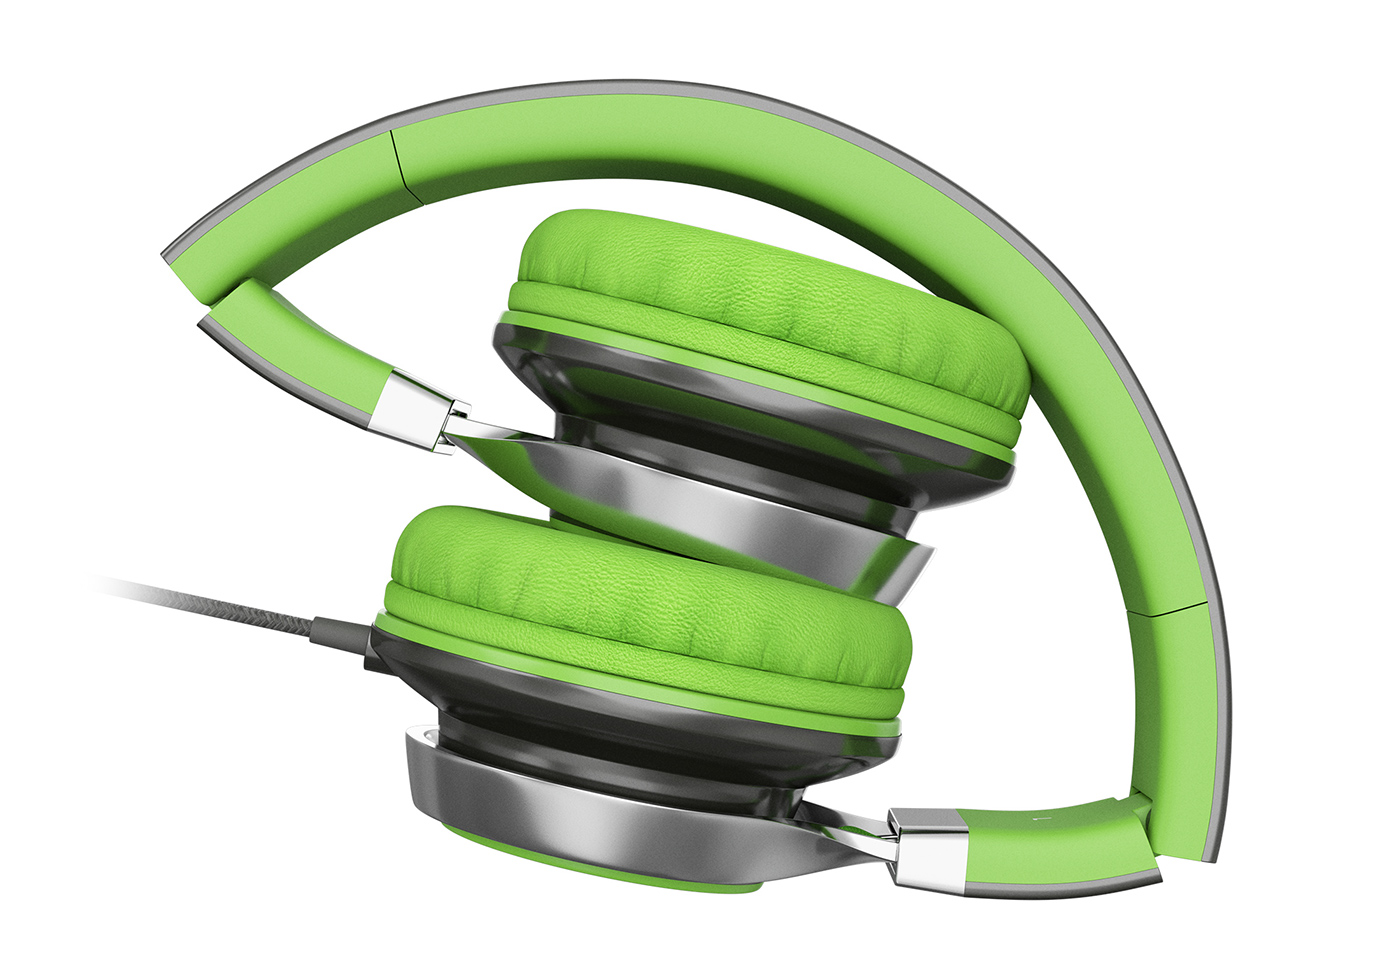 headphone pantone wacom music Gadget CGI 3D Render colors product